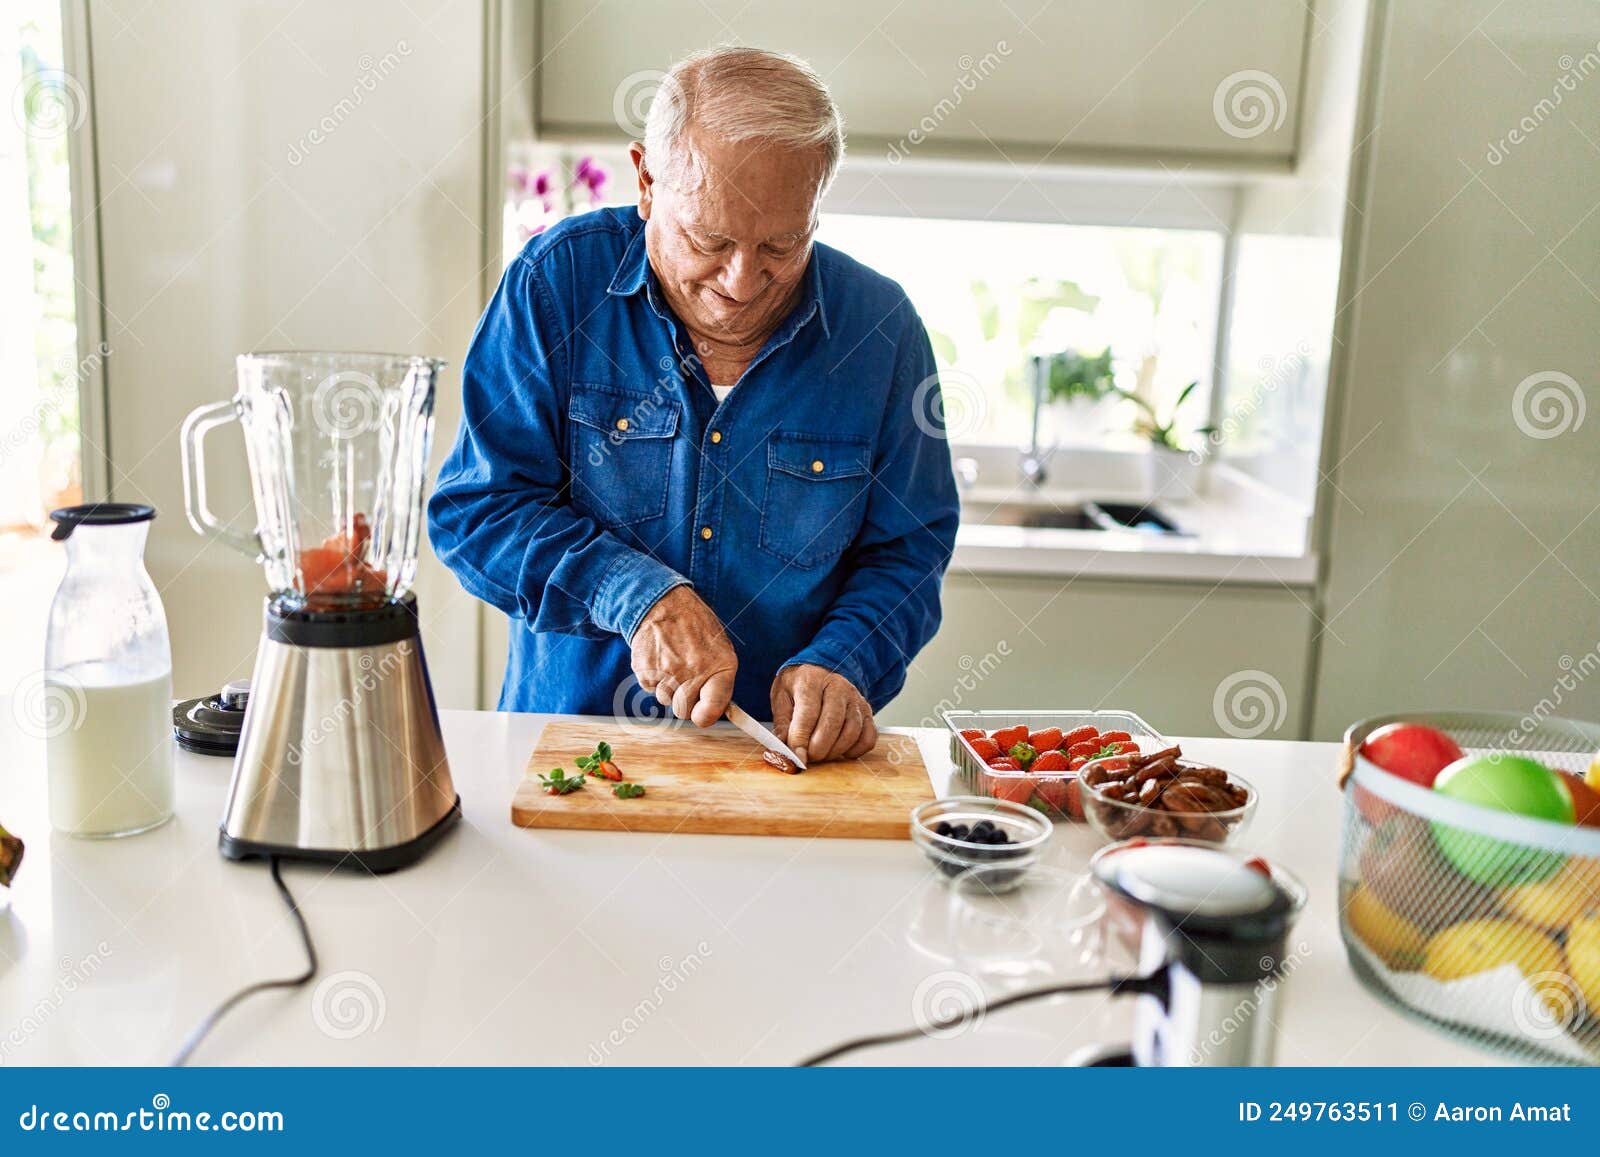 senior man smiling confident cutting datil at kitchen